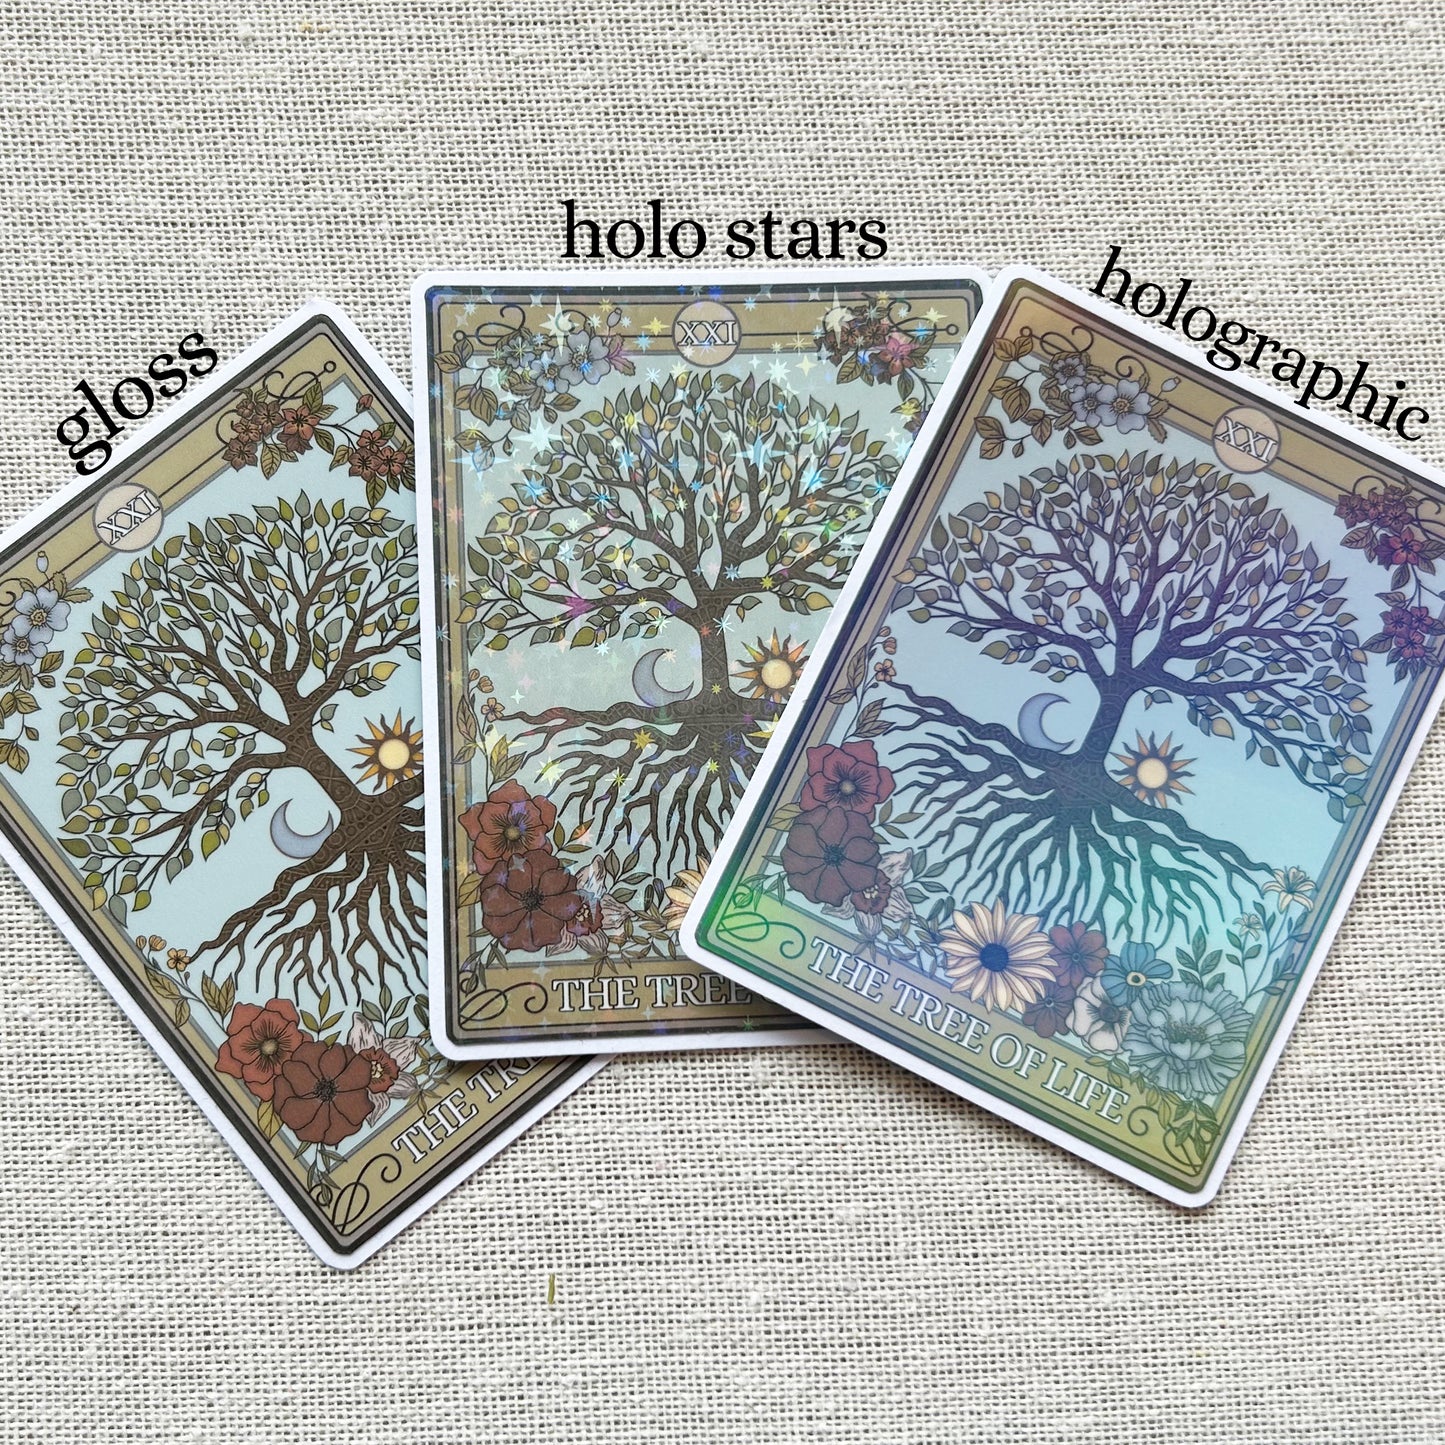 The Tree of Life Tarot Card Sticker - Esdee